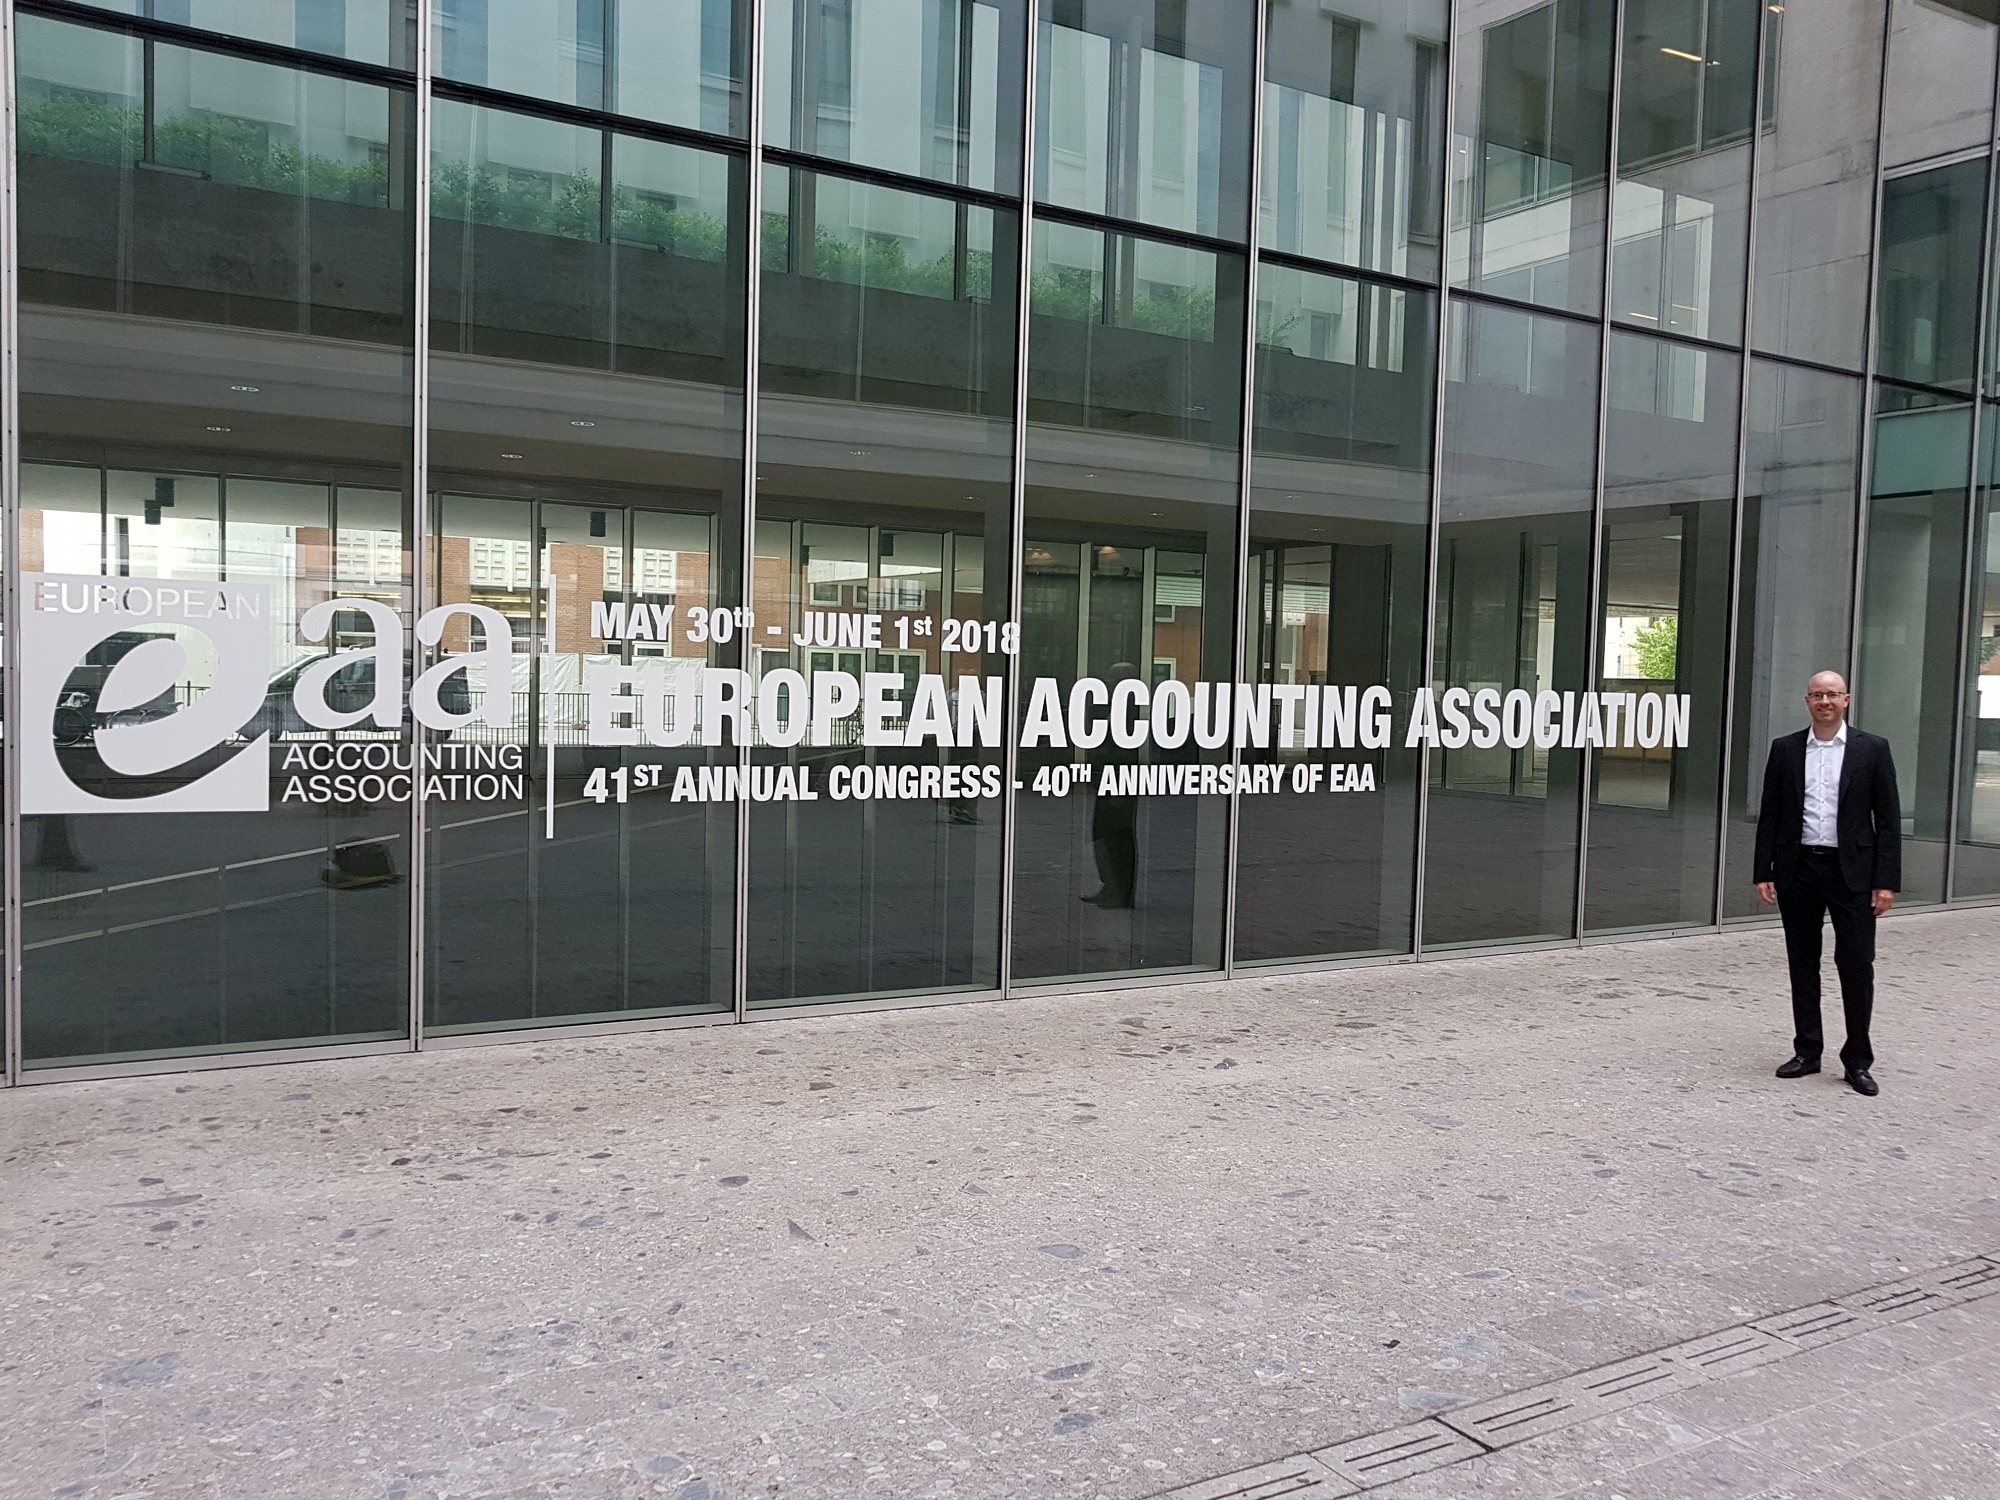 Zum Artikel "41st Annual Congress of the European Accounting Association at Bocconi University, Mailand, Italien"